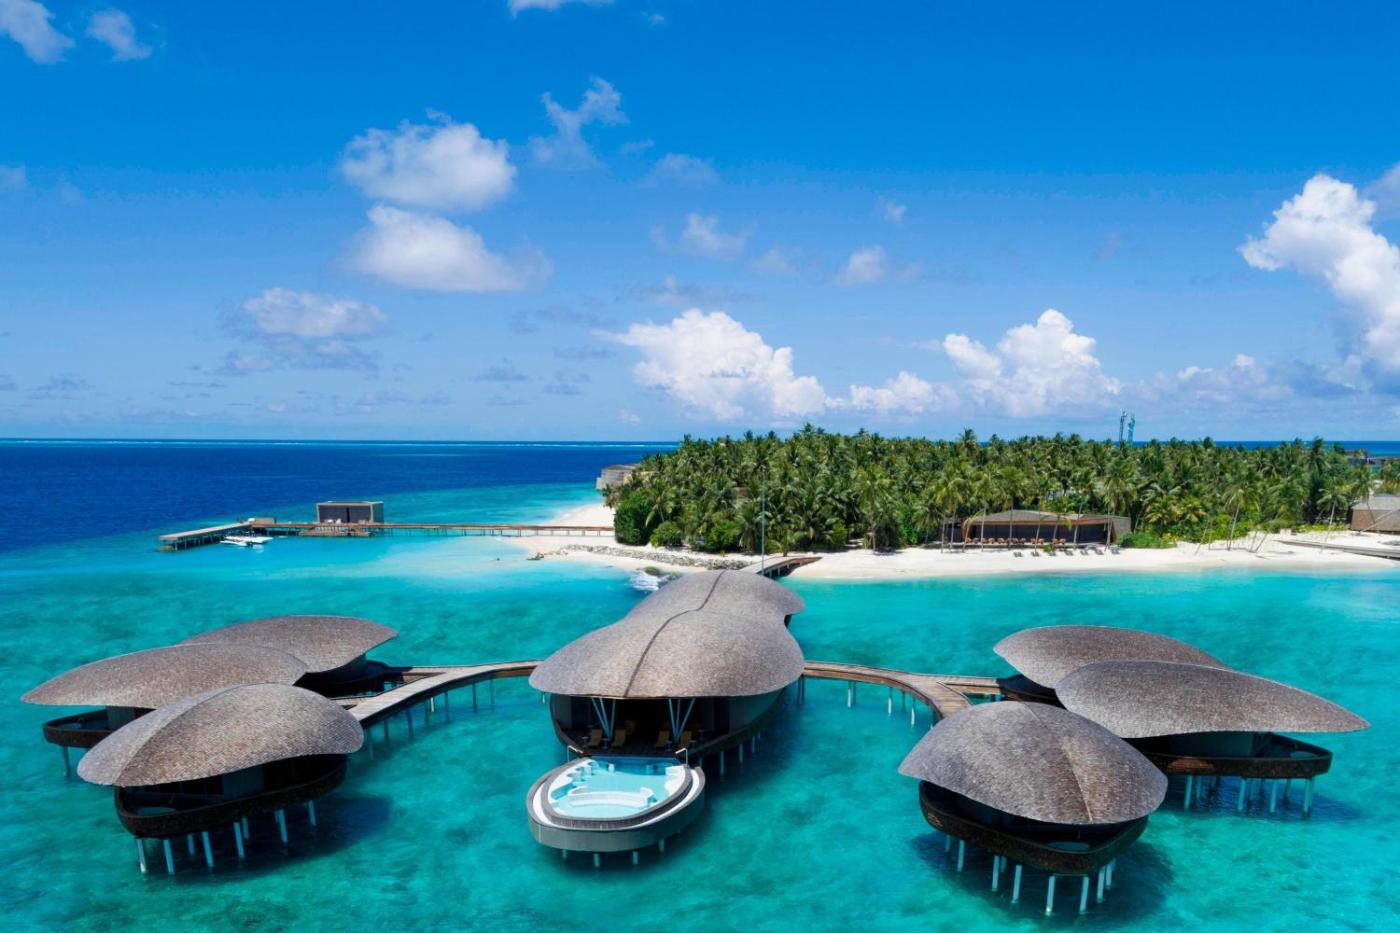 Hotel with private pool - The St. Regis Maldives Vommuli Resort